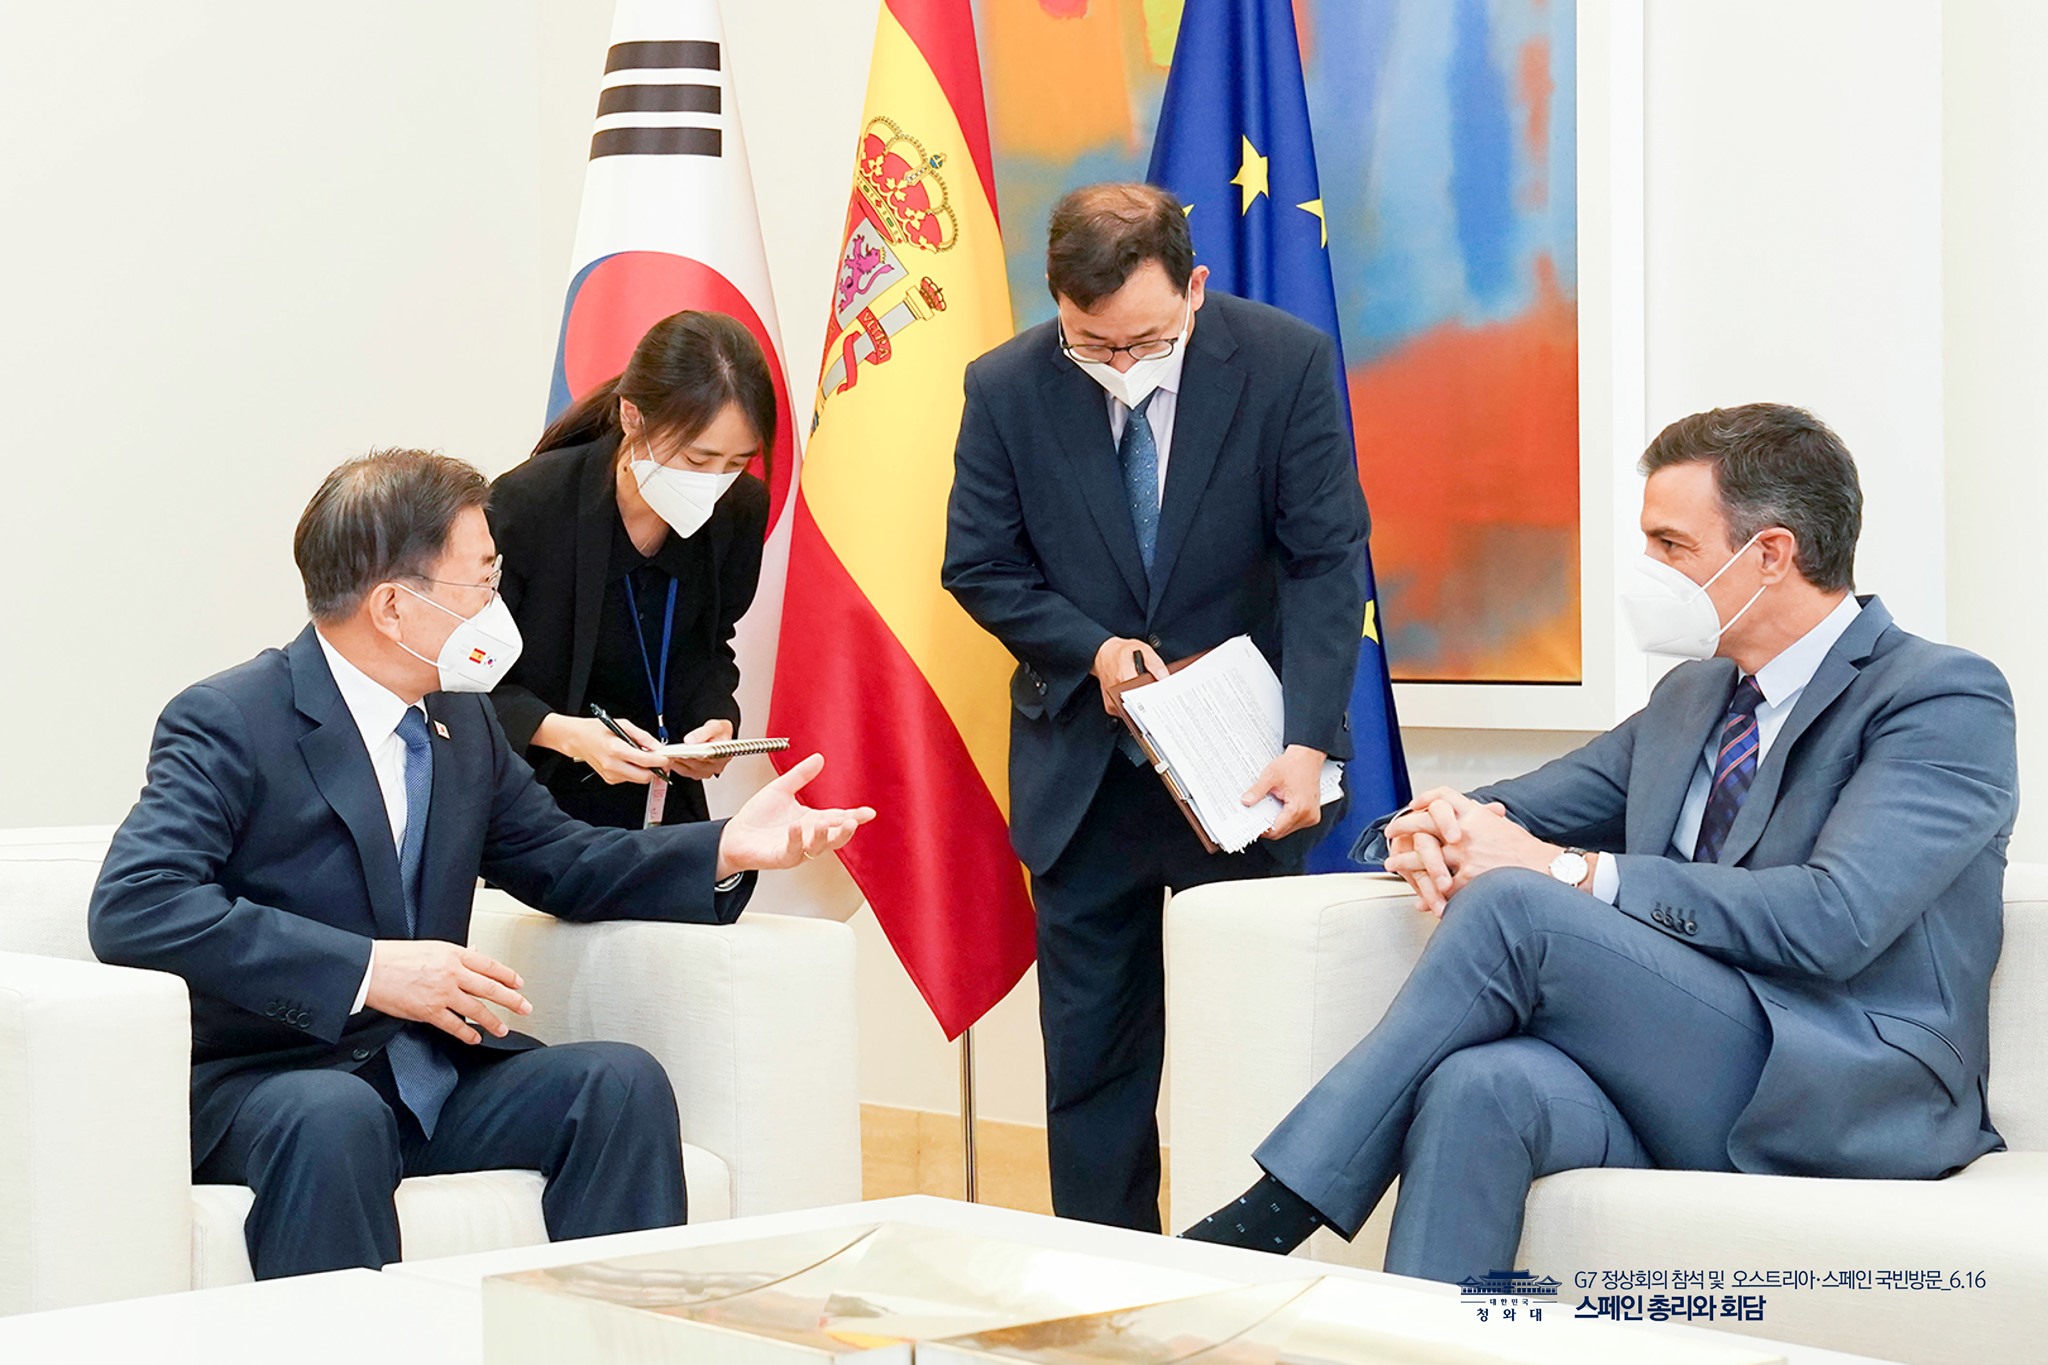 2021 G7 정상회의 참석 및 오스트리아-스페인 국빈방문_6.16
스페인 총리와 회담